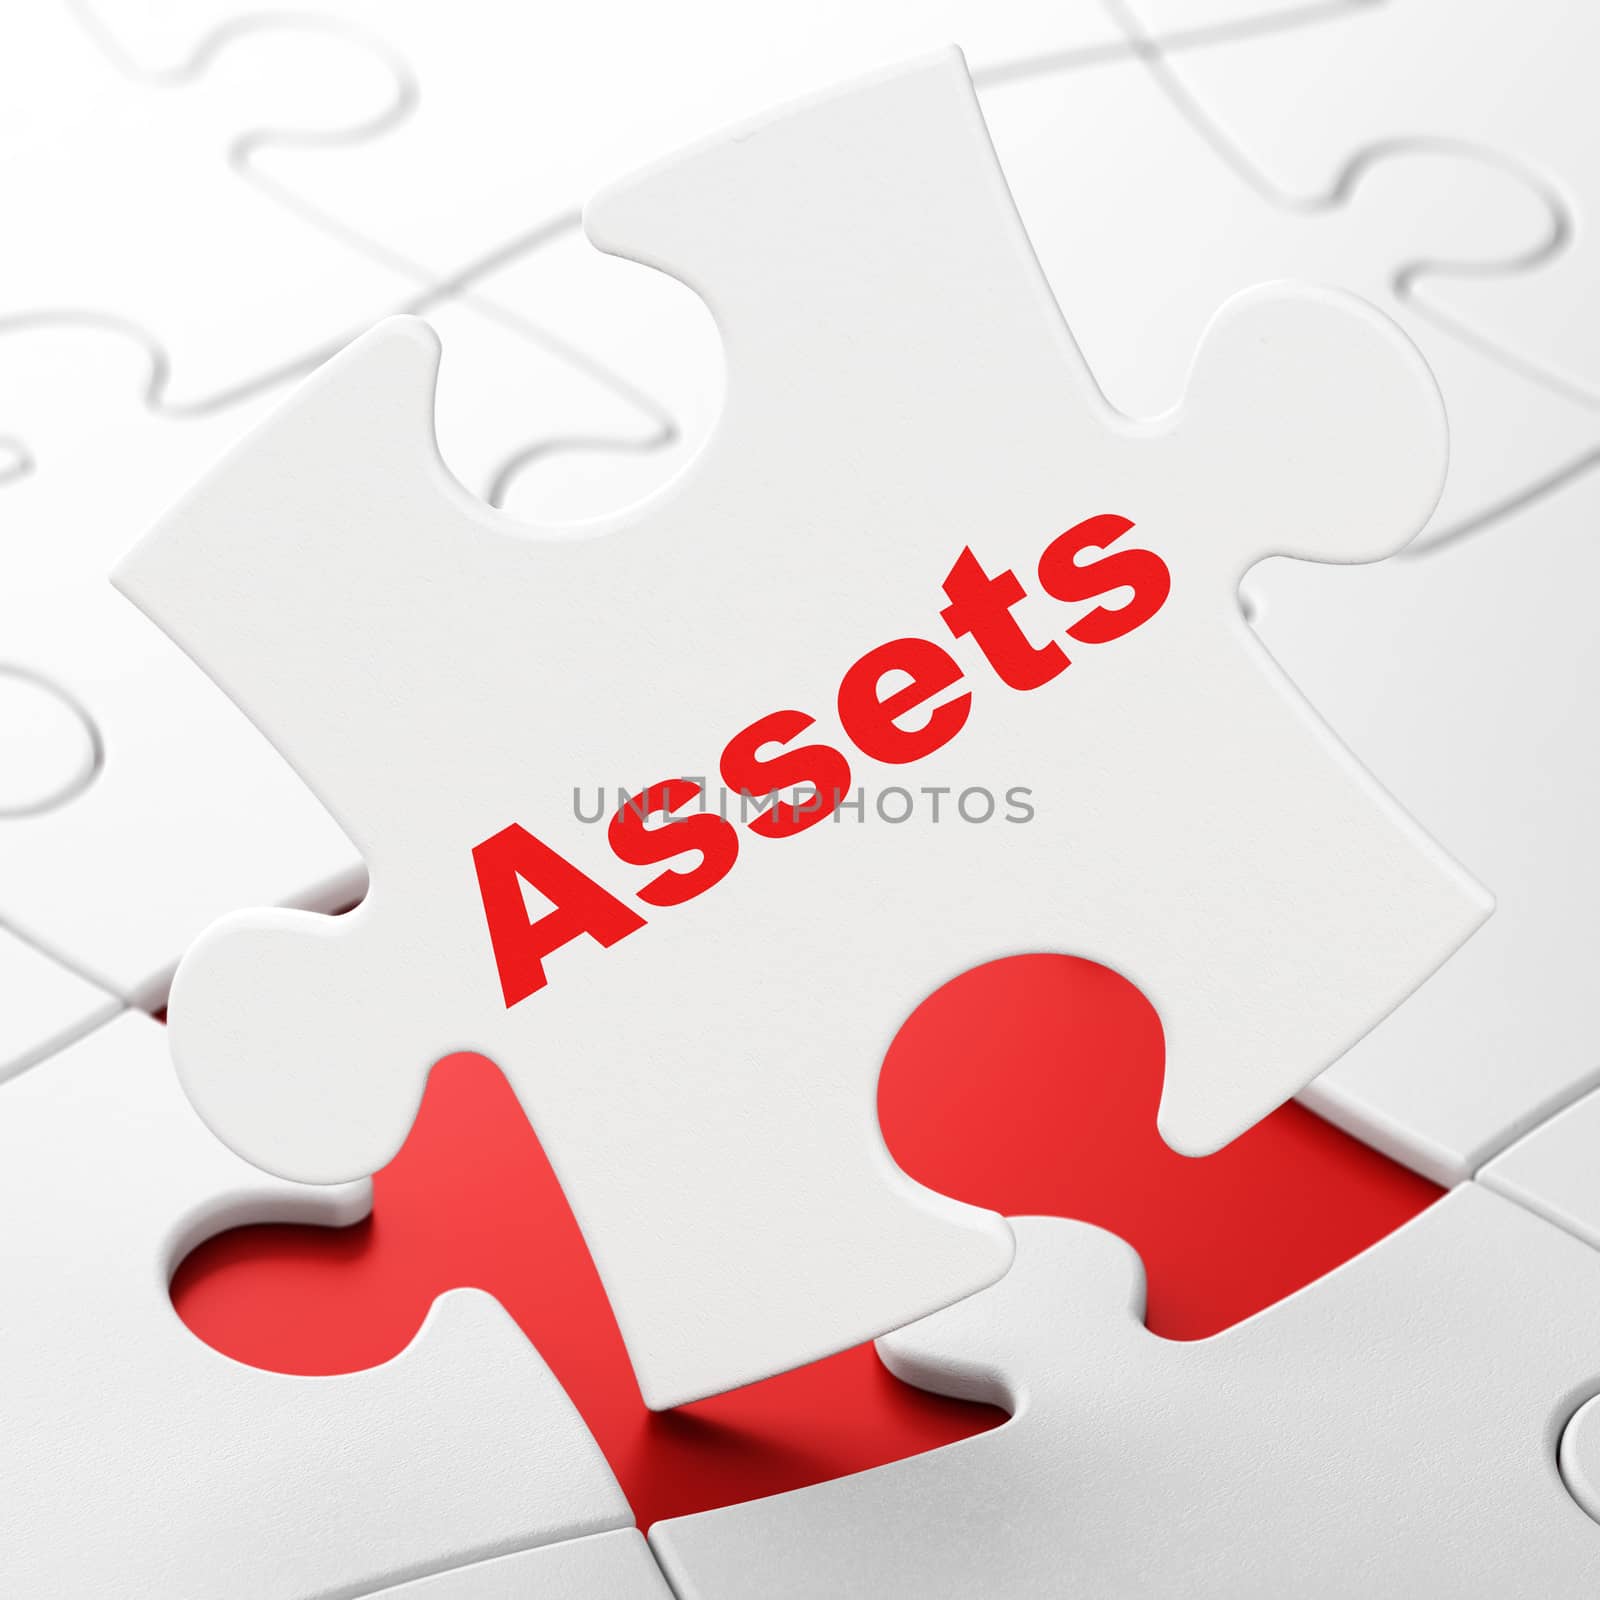 Money concept: Assets on puzzle background by maxkabakov